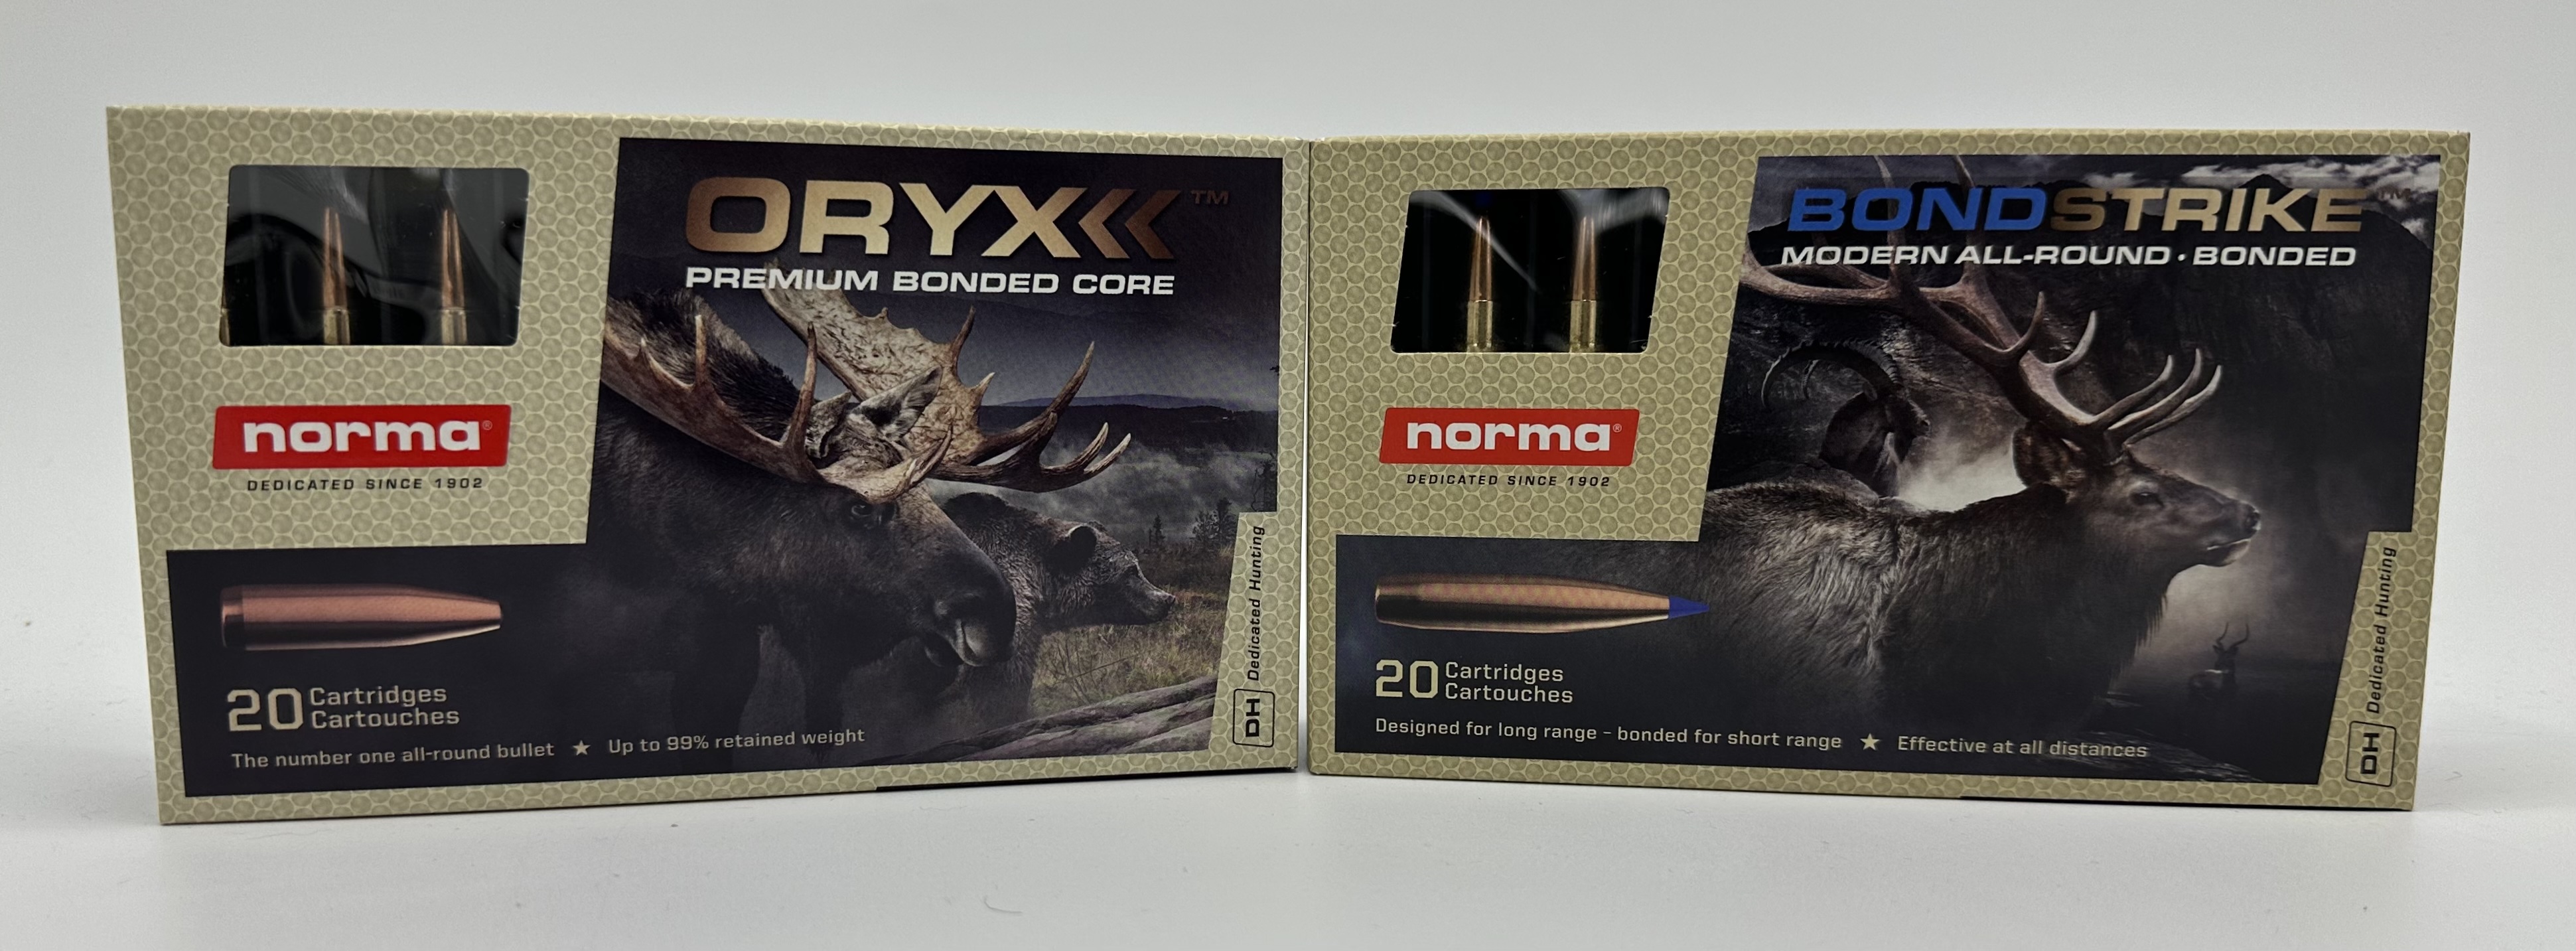 Norma Oryx and Bondstrike Ammo.jpg